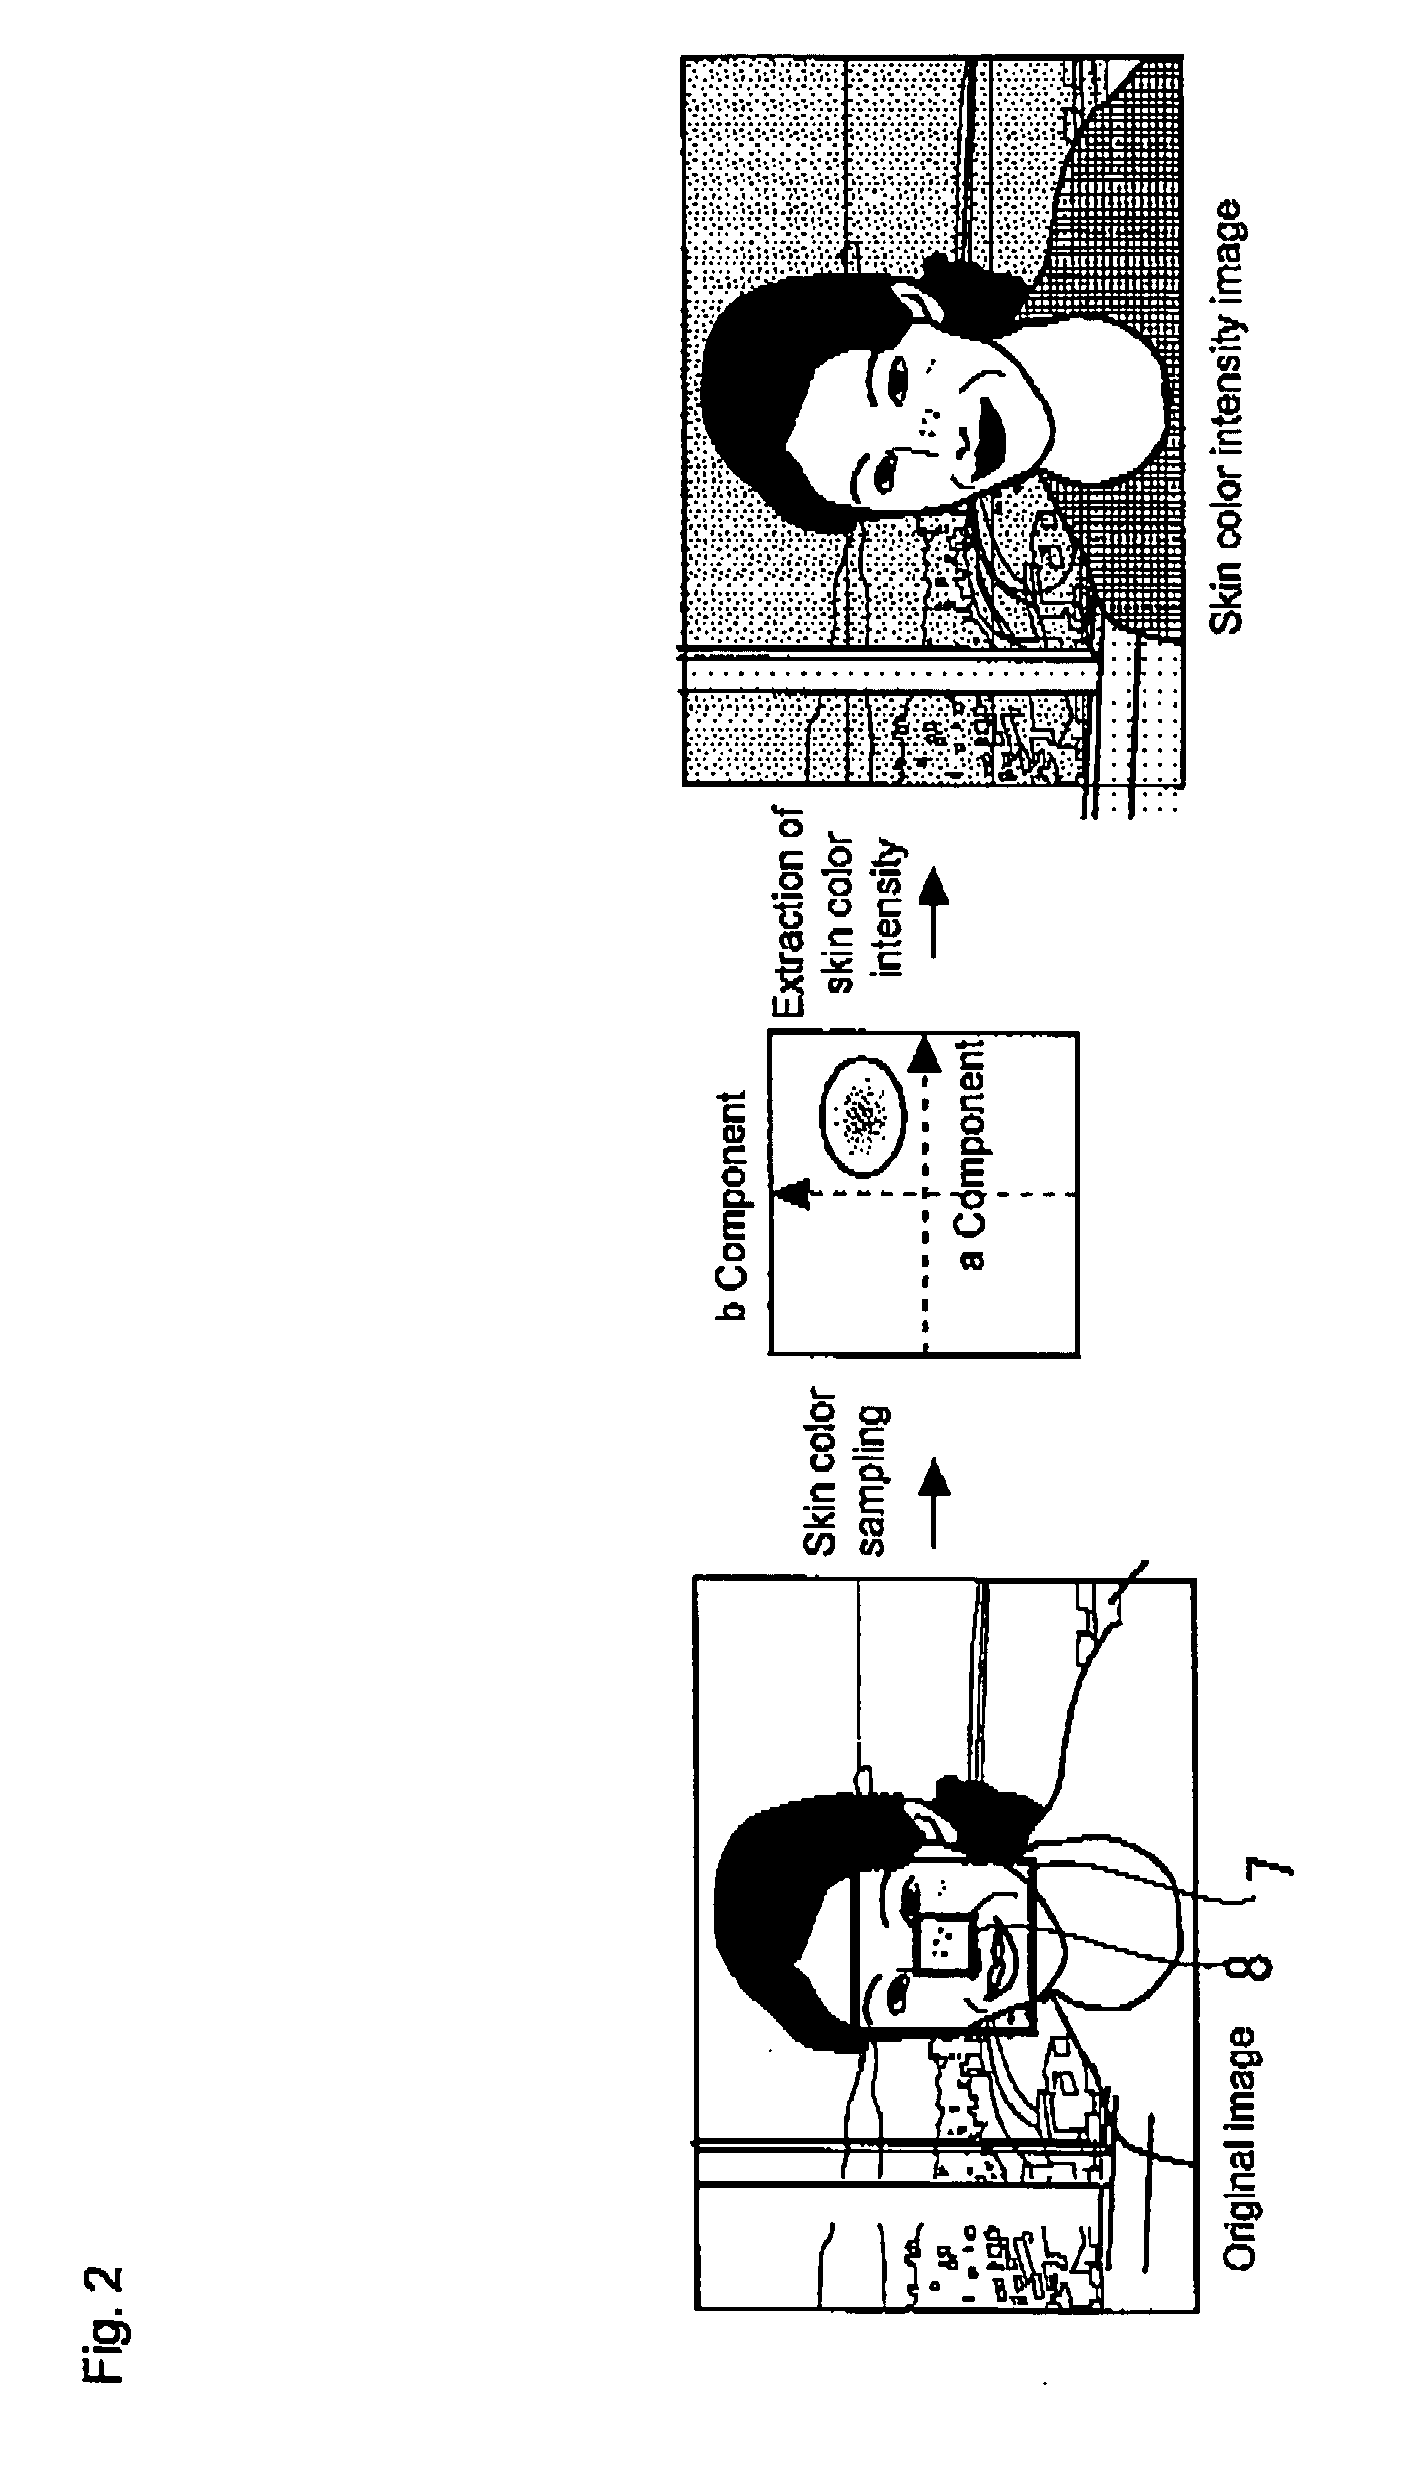 Image correction apparatus